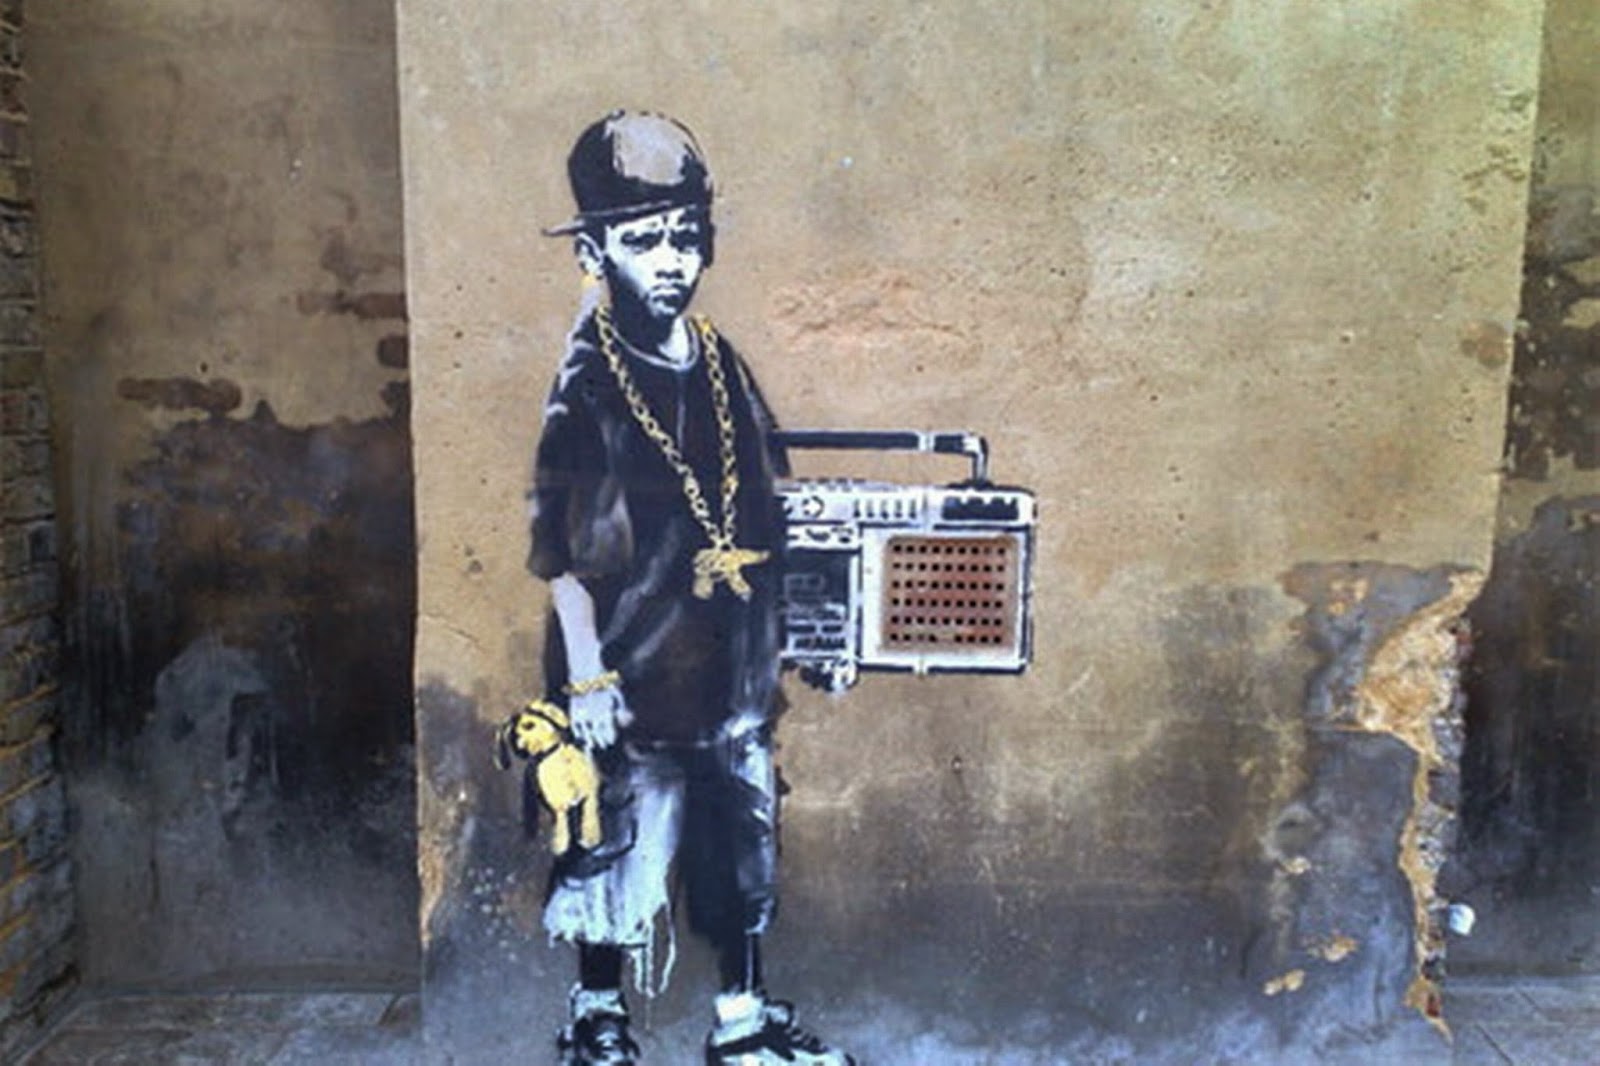 street art wallpaper,street art,art,wall,visual arts,street performance